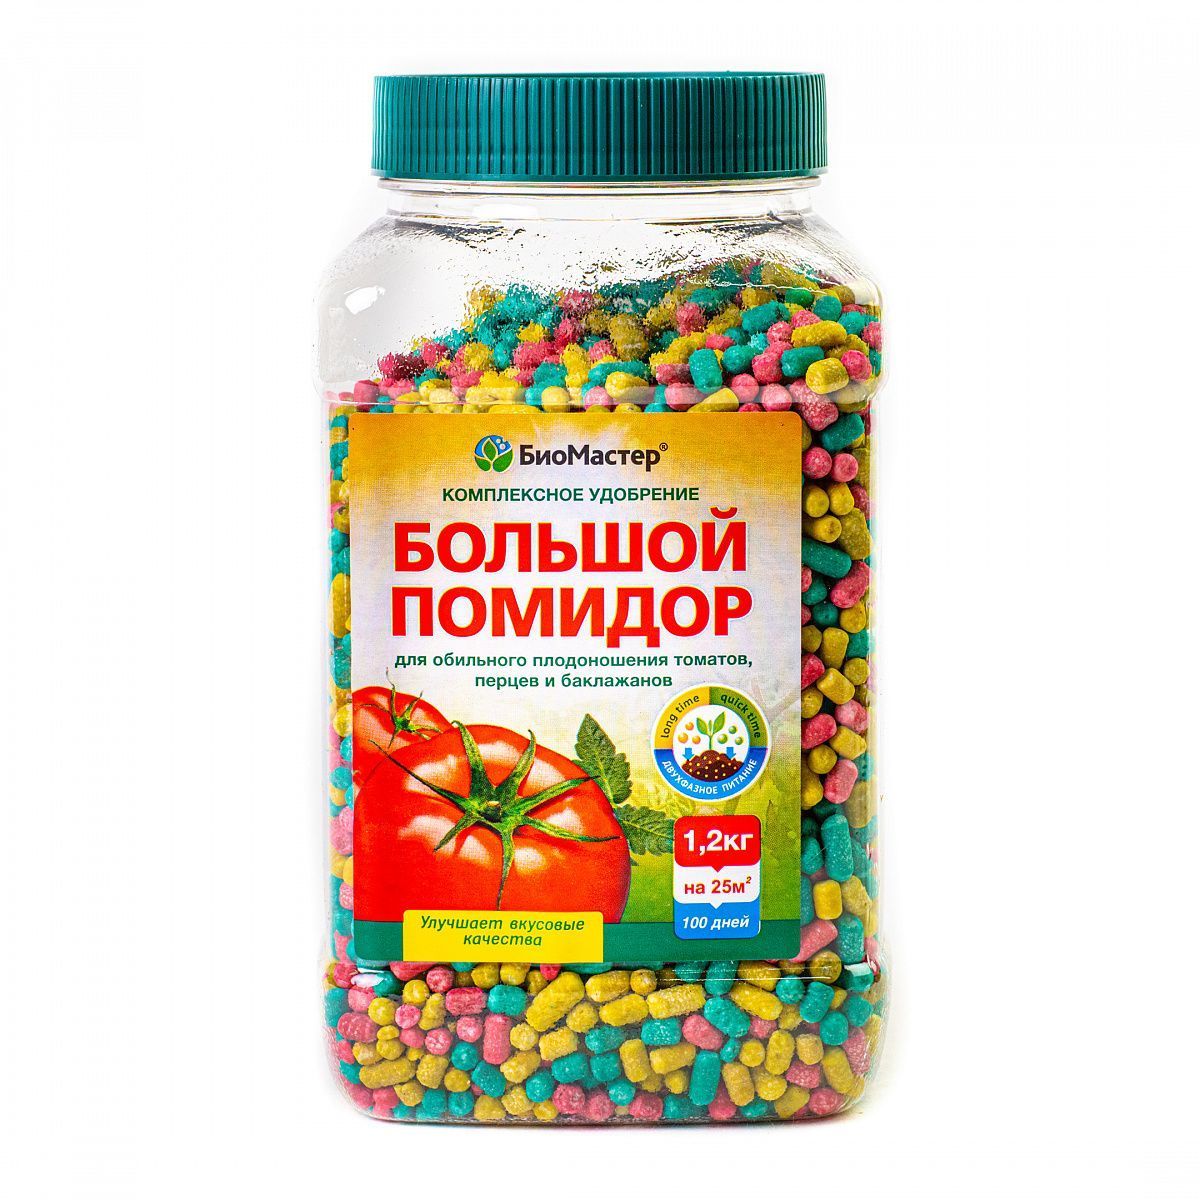 КМУ Большой помидор БиоМастер, 1,2 кг